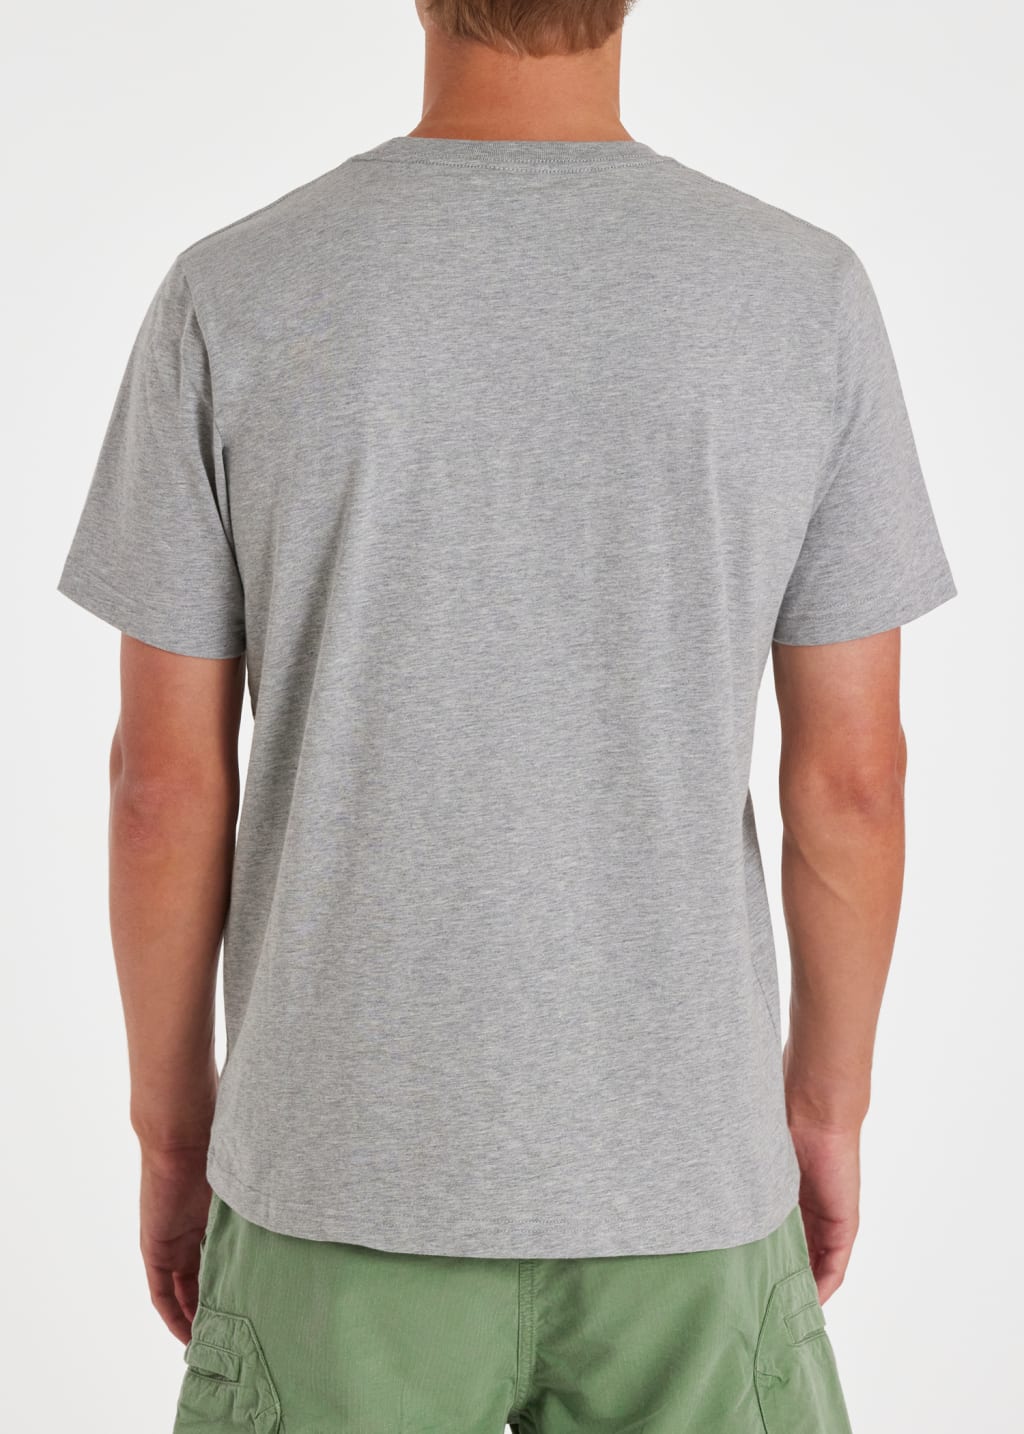 Back Model View - Grey Marl Cotton Zebra Logo T-Shirt Paul Smith